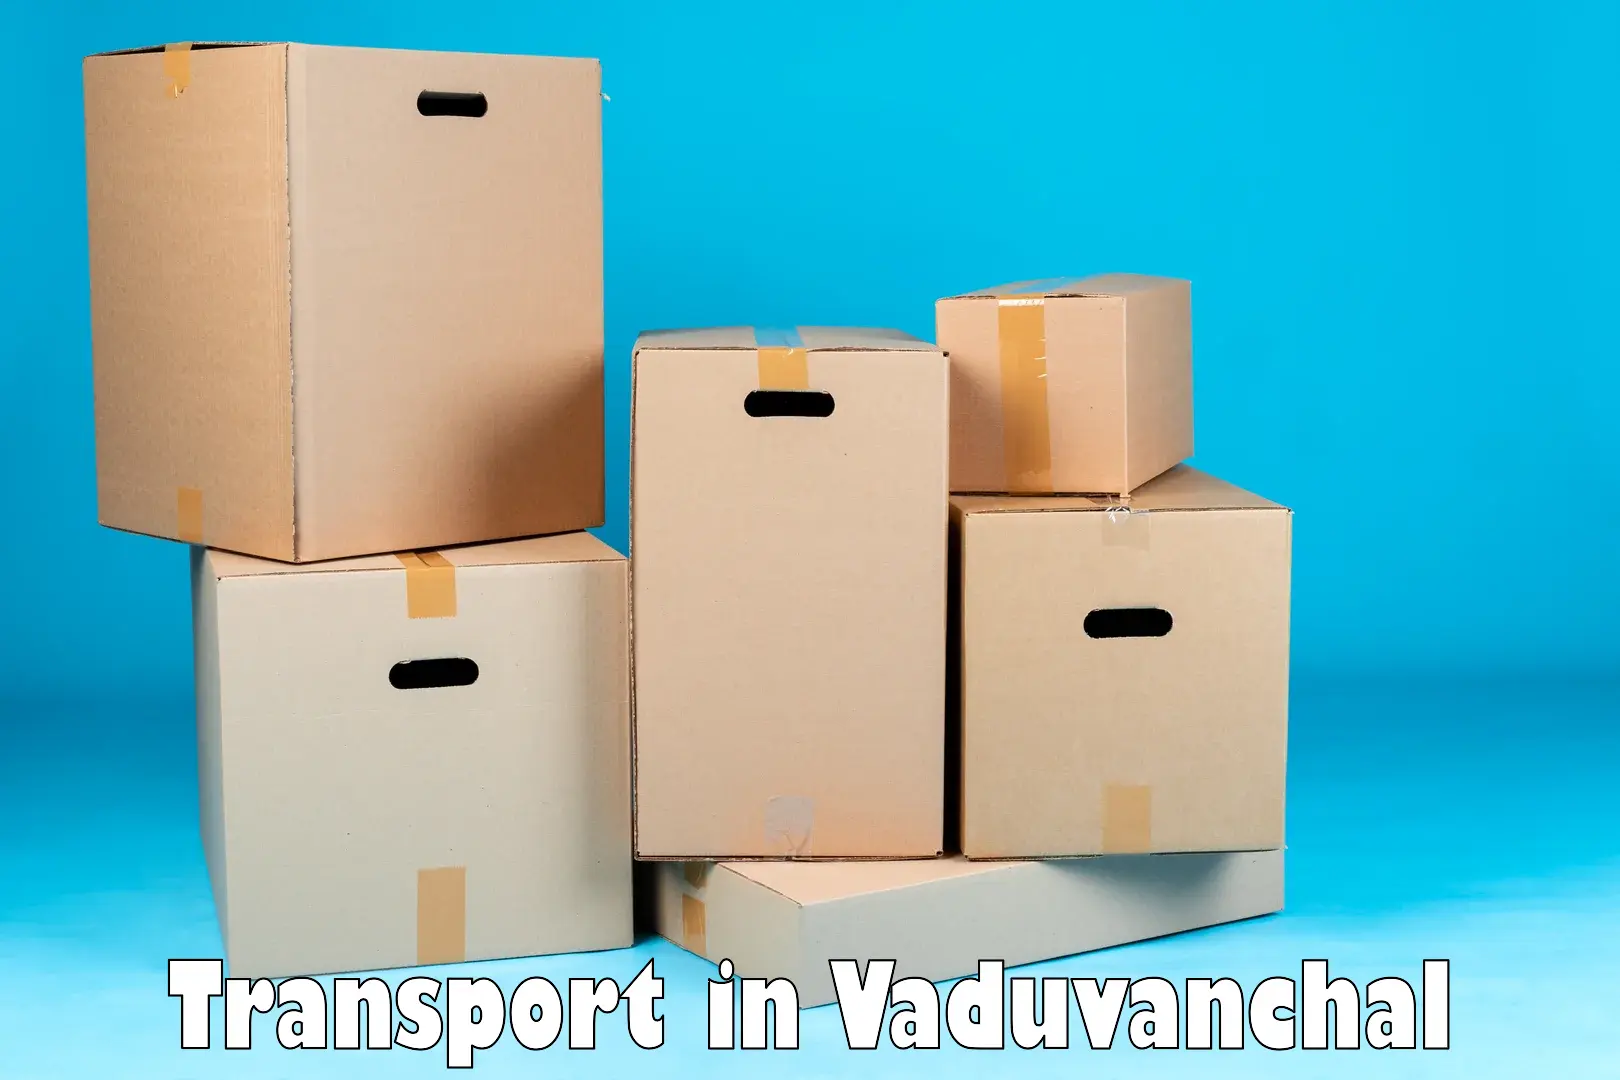 Transport in sharing in Vaduvanchal